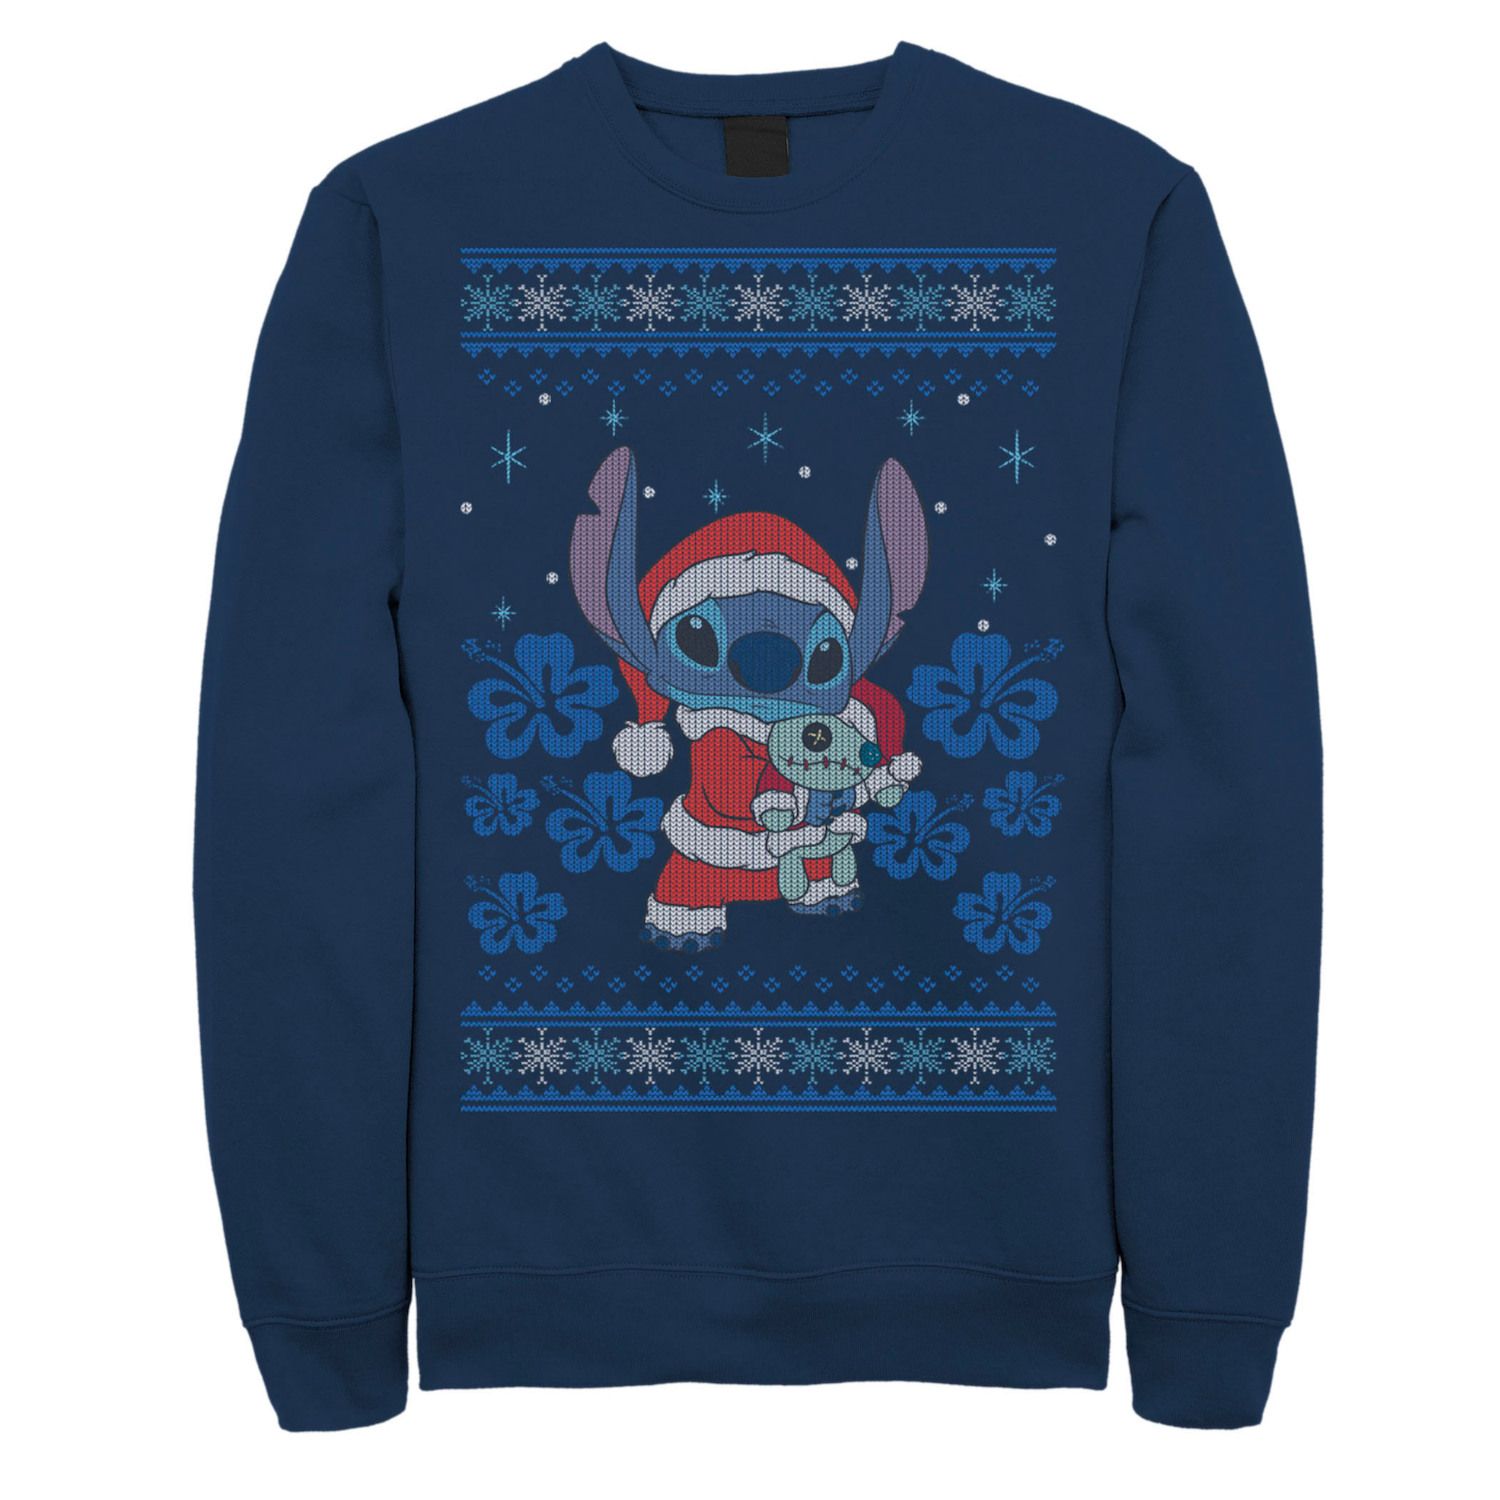 Image for Disney Men's Lilo & Stitch Christmas Stitch Sweater Style Sweatshirt at Kohl's.